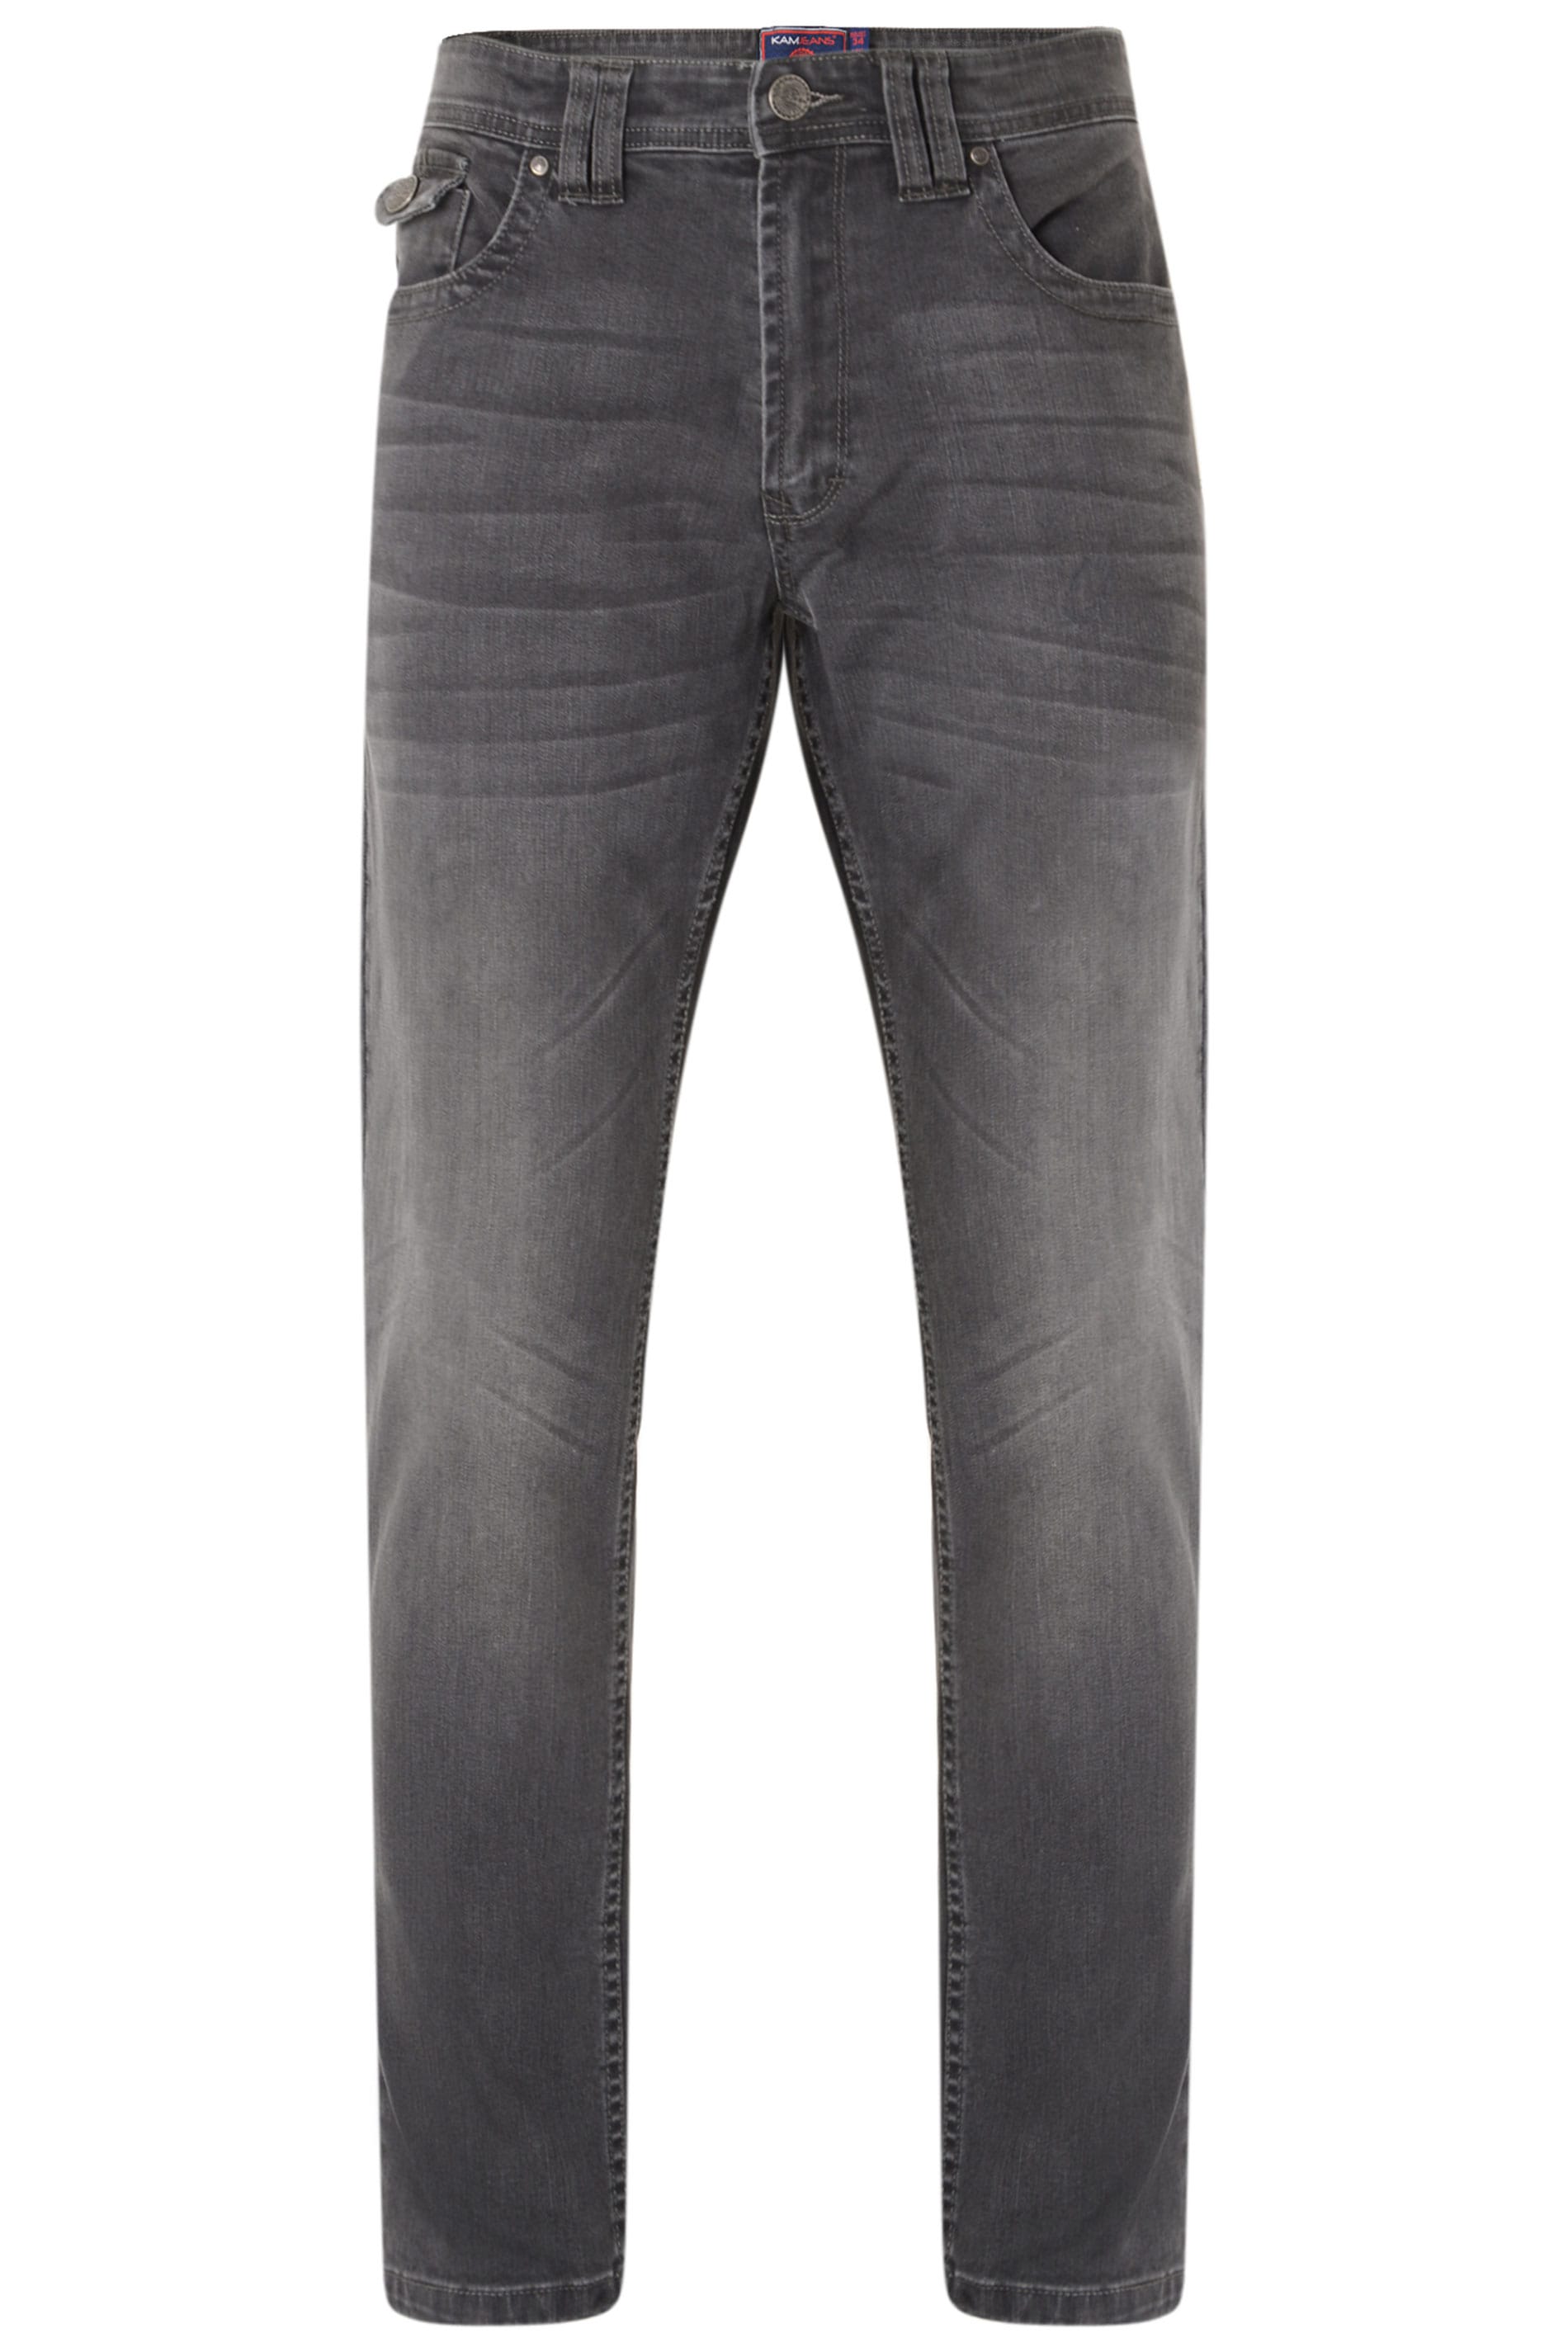 KAM Charcoal Grey Stretch Jeans | BadRhino